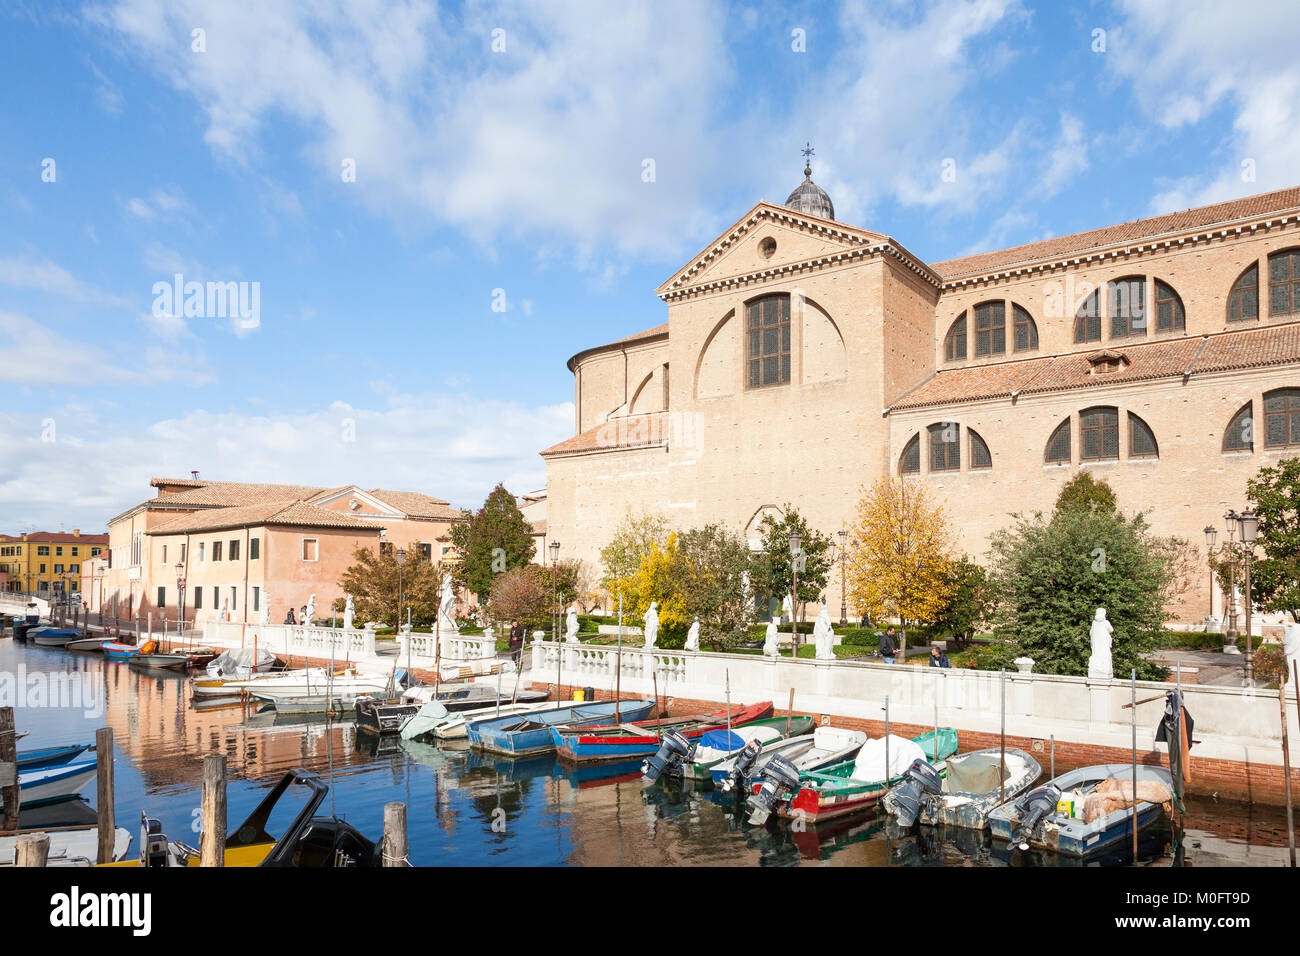 The Duomo or Cathedral of Santa Maria Assunta, Chioggia, Southern lagoon, Venice,  Veneto, Italy on Canal Perottolo Stock Photo